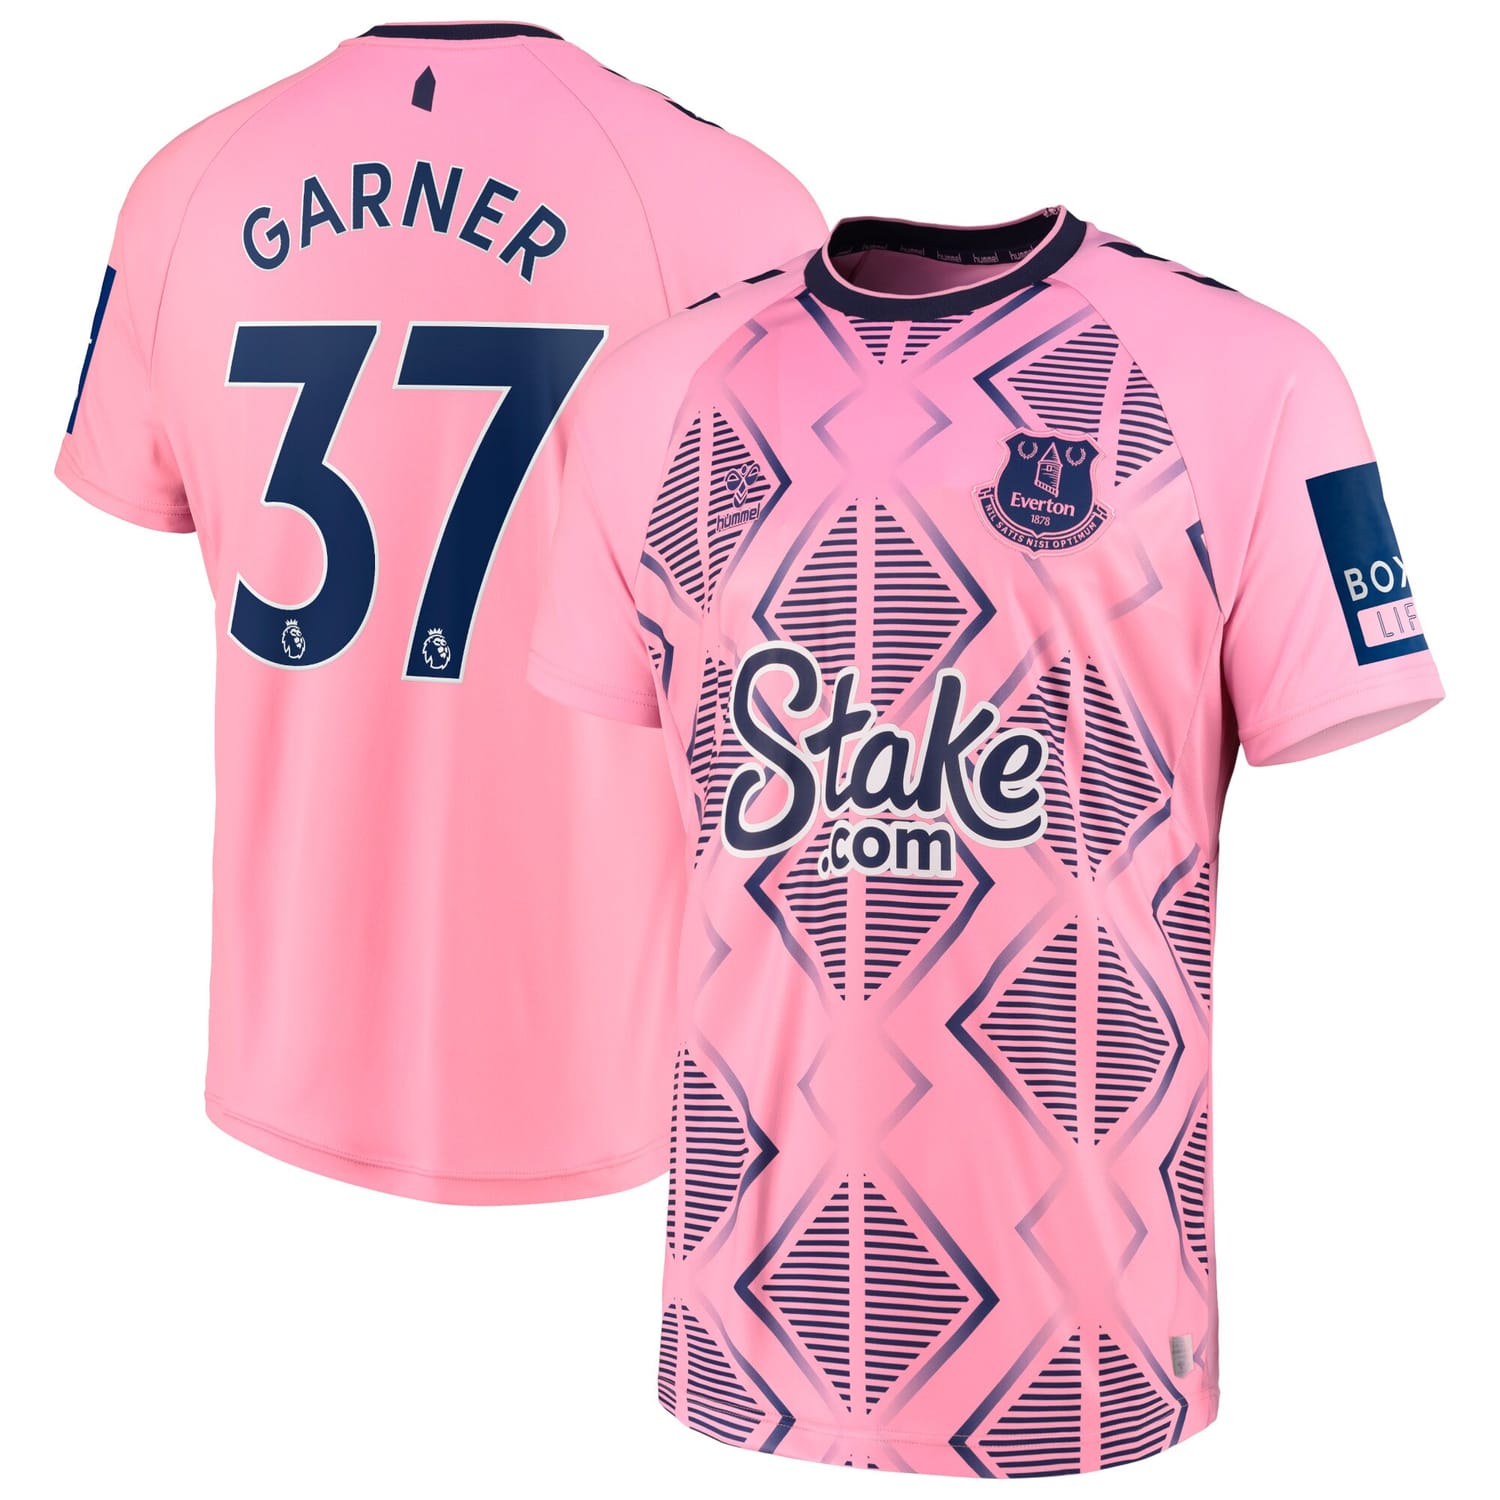 Premier League Everton Away Jersey Shirt 2022-23 player James Garner 37 printing for Men